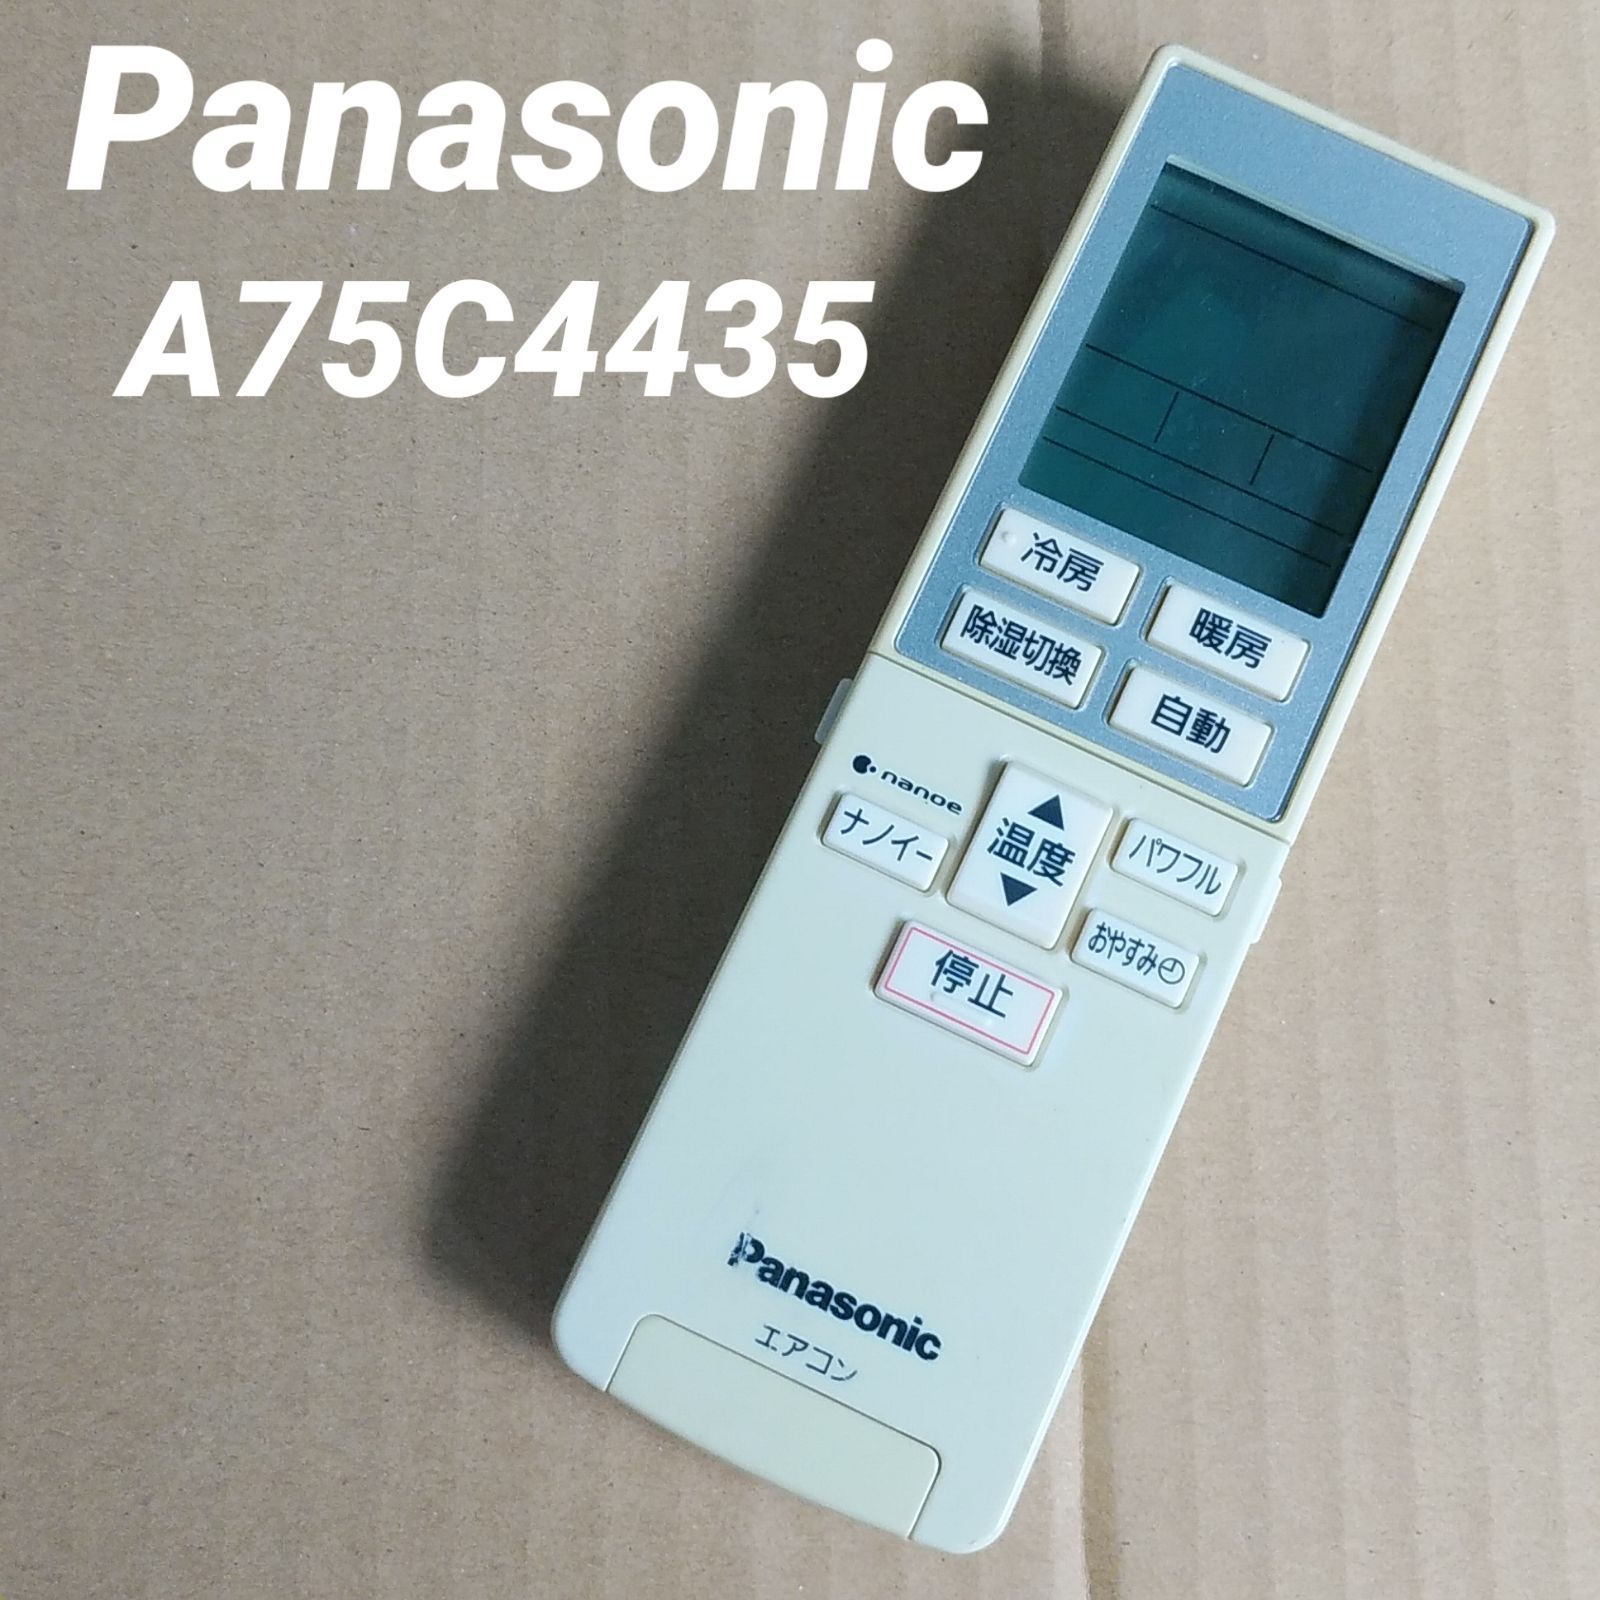 Panasonicエアコン リモコン - 冷暖房/空調